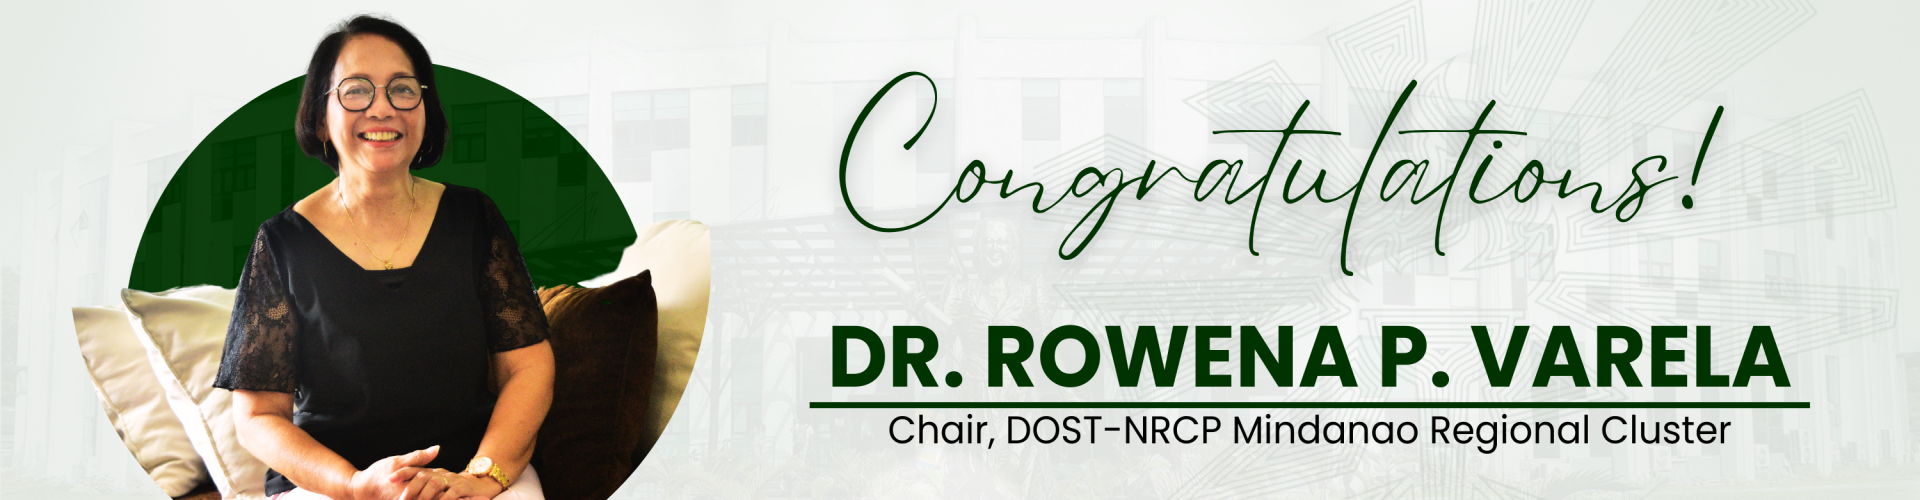 Dr. Rowena P. Varela Chair, DOST-NRCP Mindanao Regional Cluster